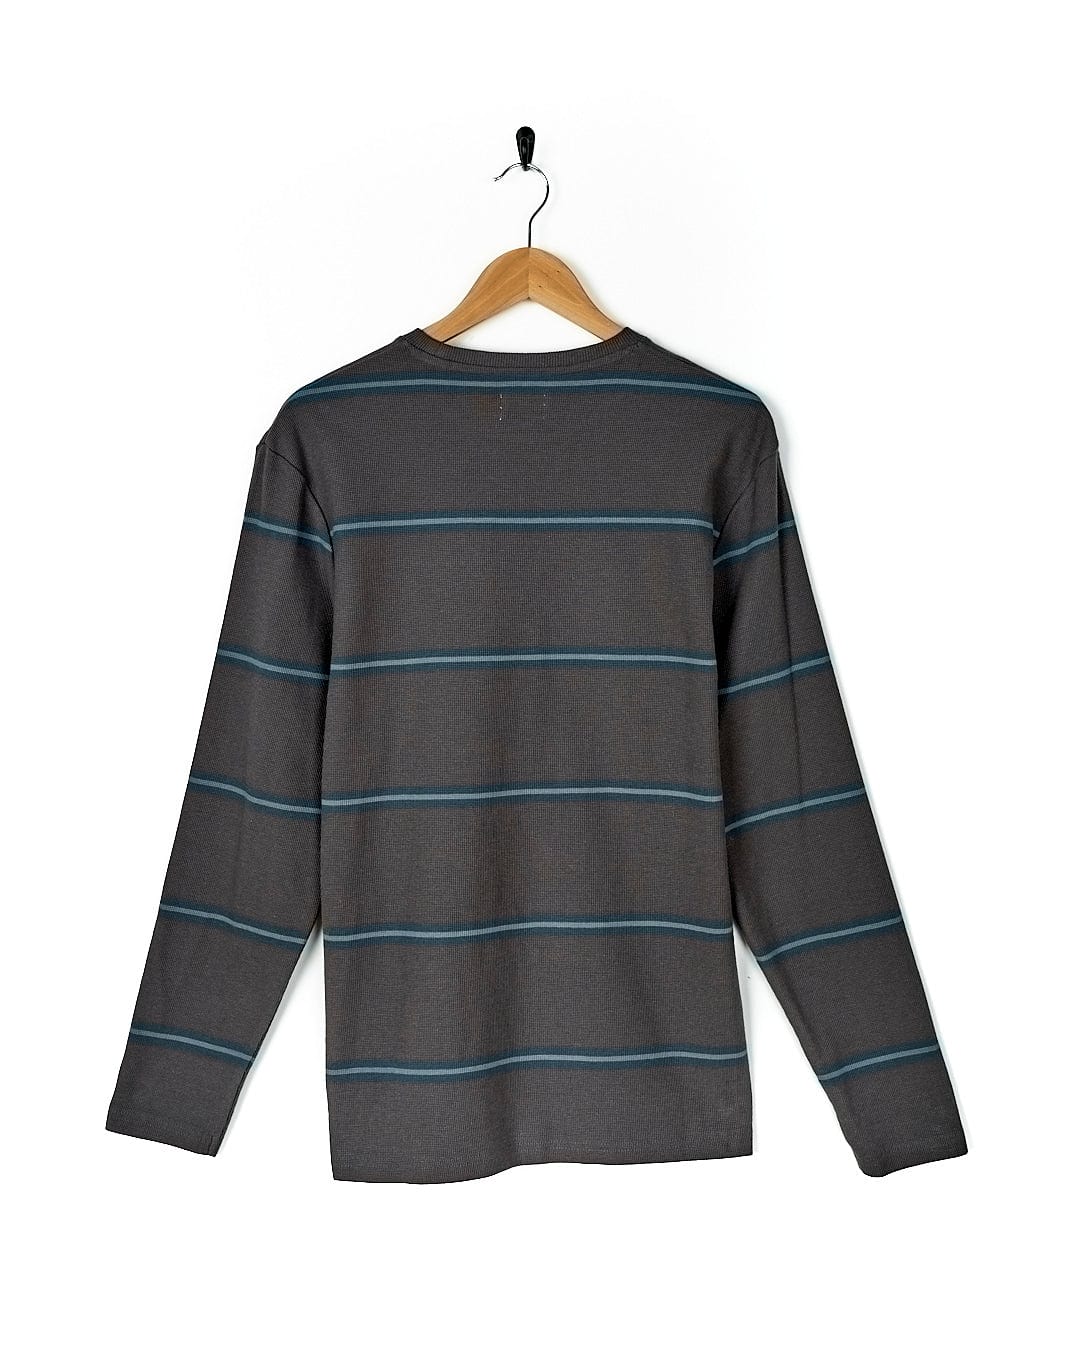 A Saltrock Jasper - Long Sleeve Waffle T-Shirt - Dark Grey with blue and grey stripes.